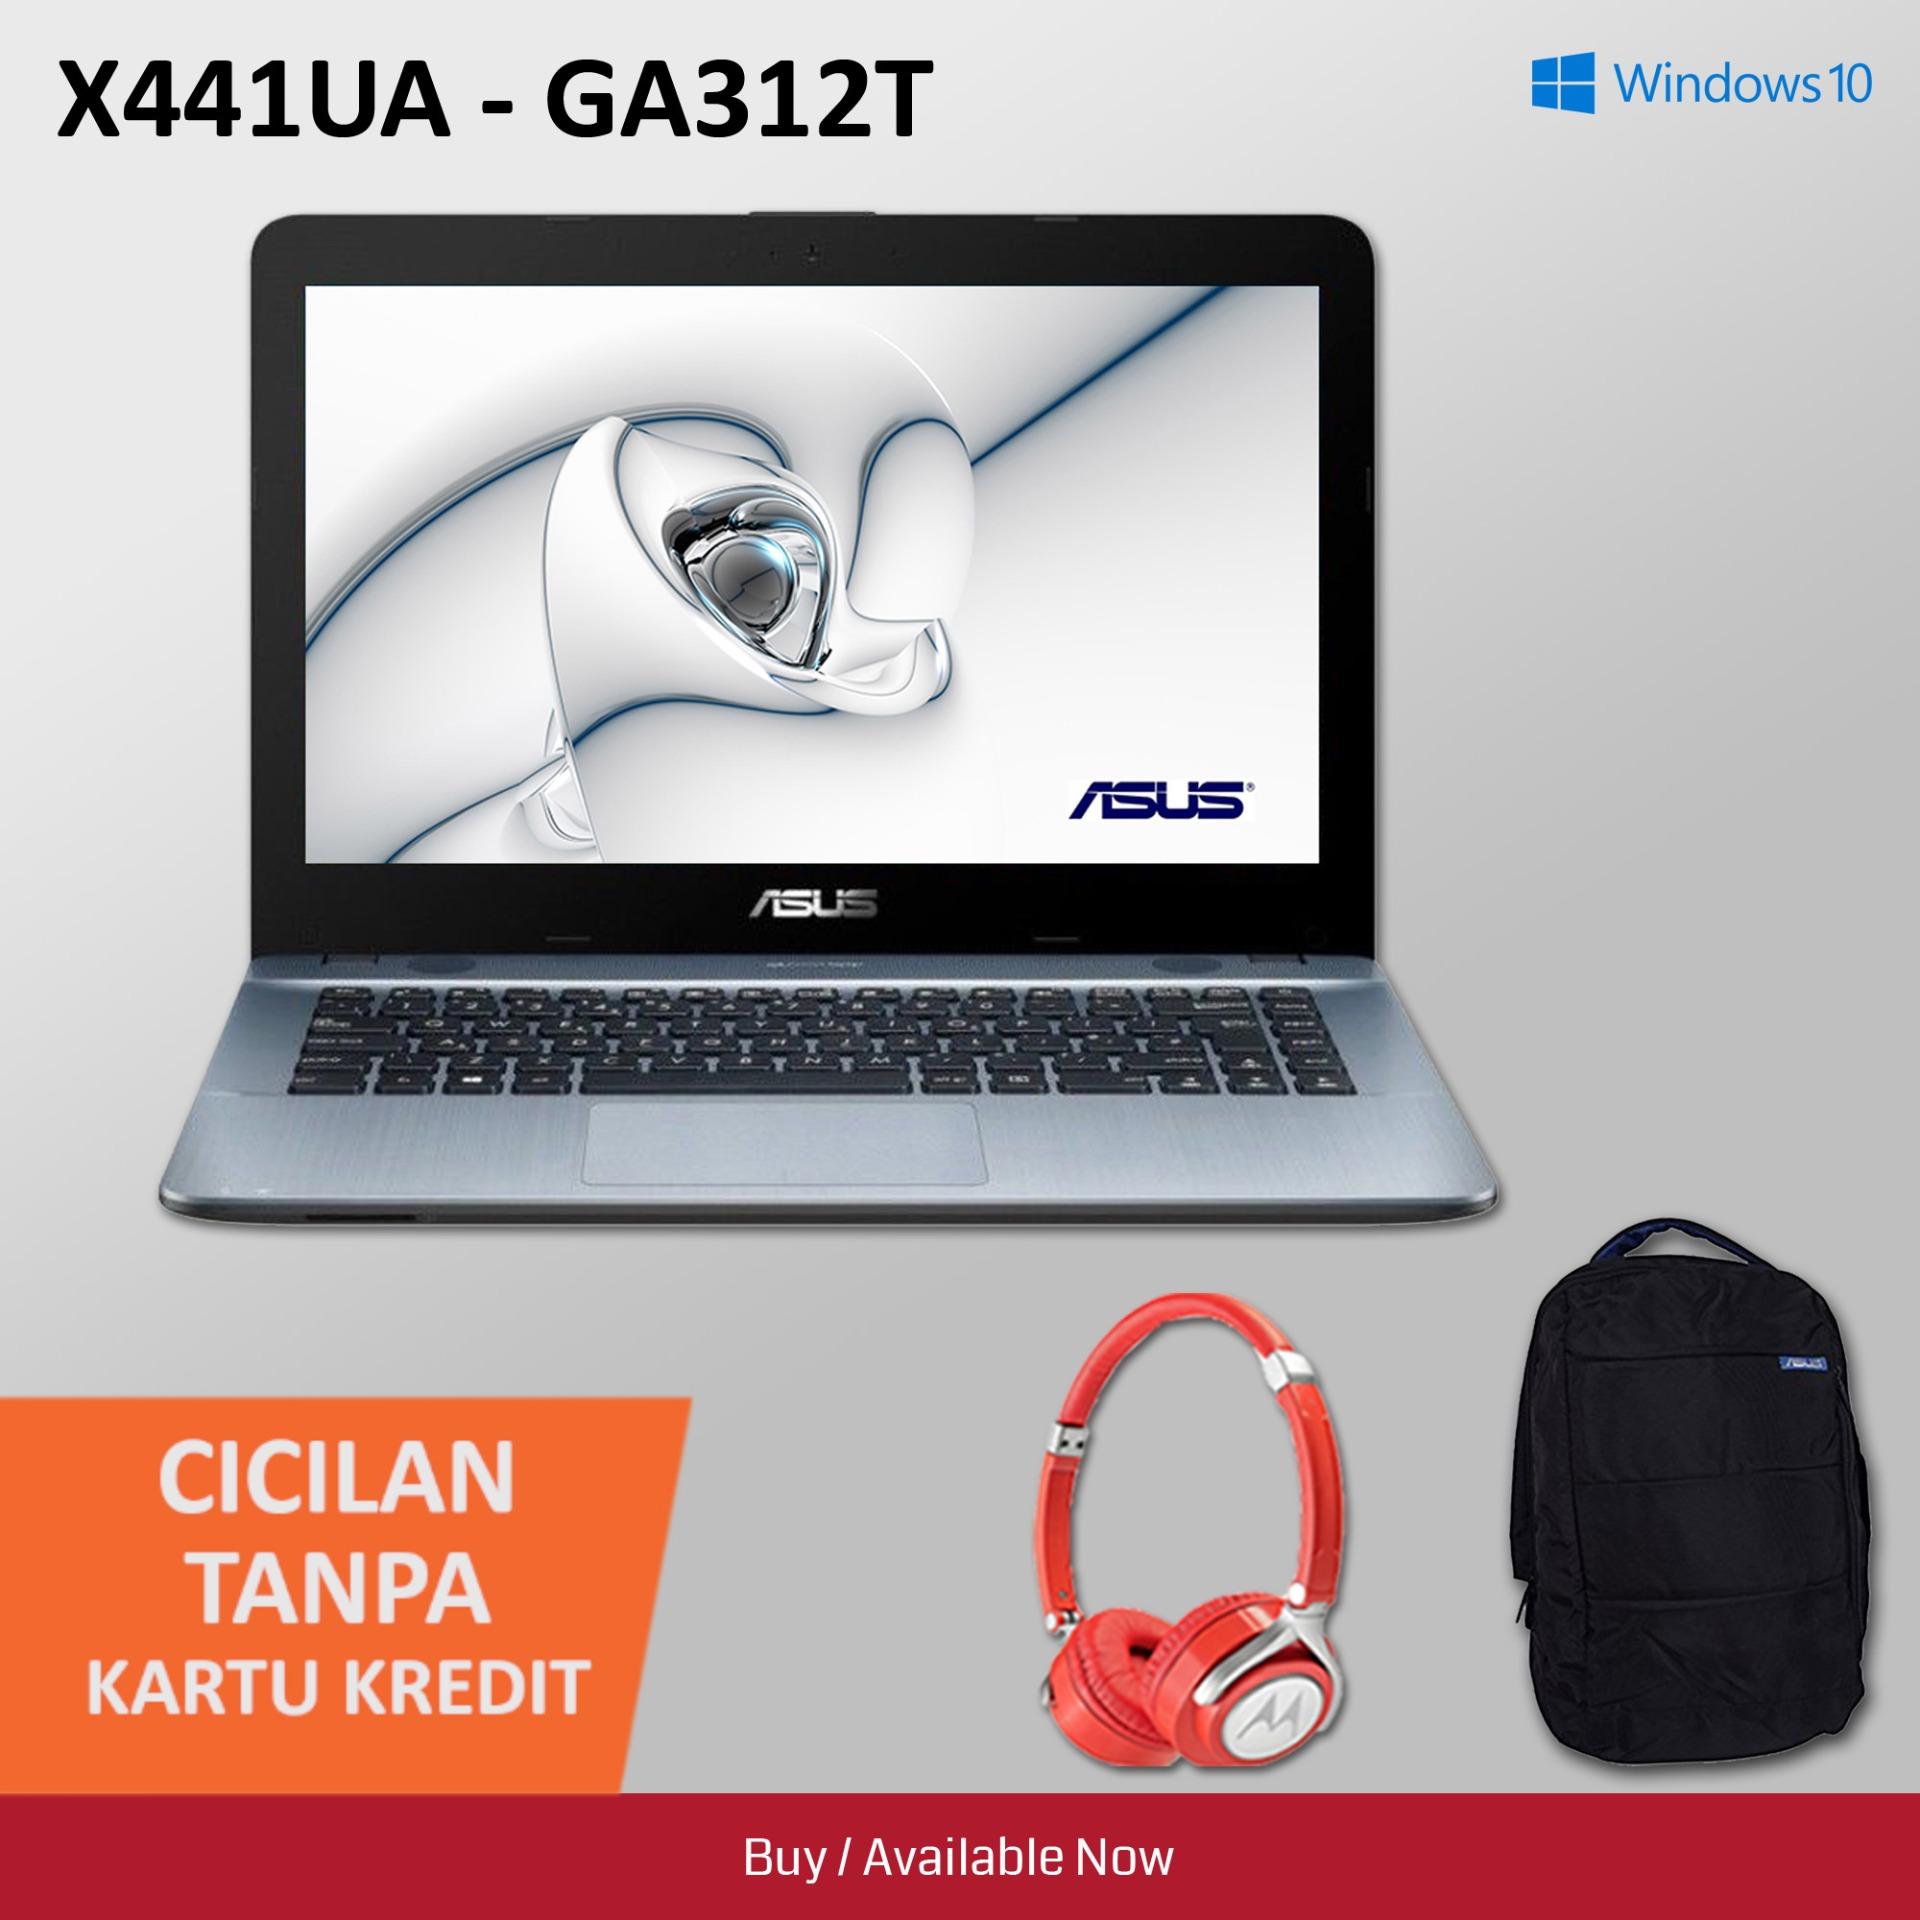 ASUS X441UA Notebook [i3-7020U/4GB/1TB/14